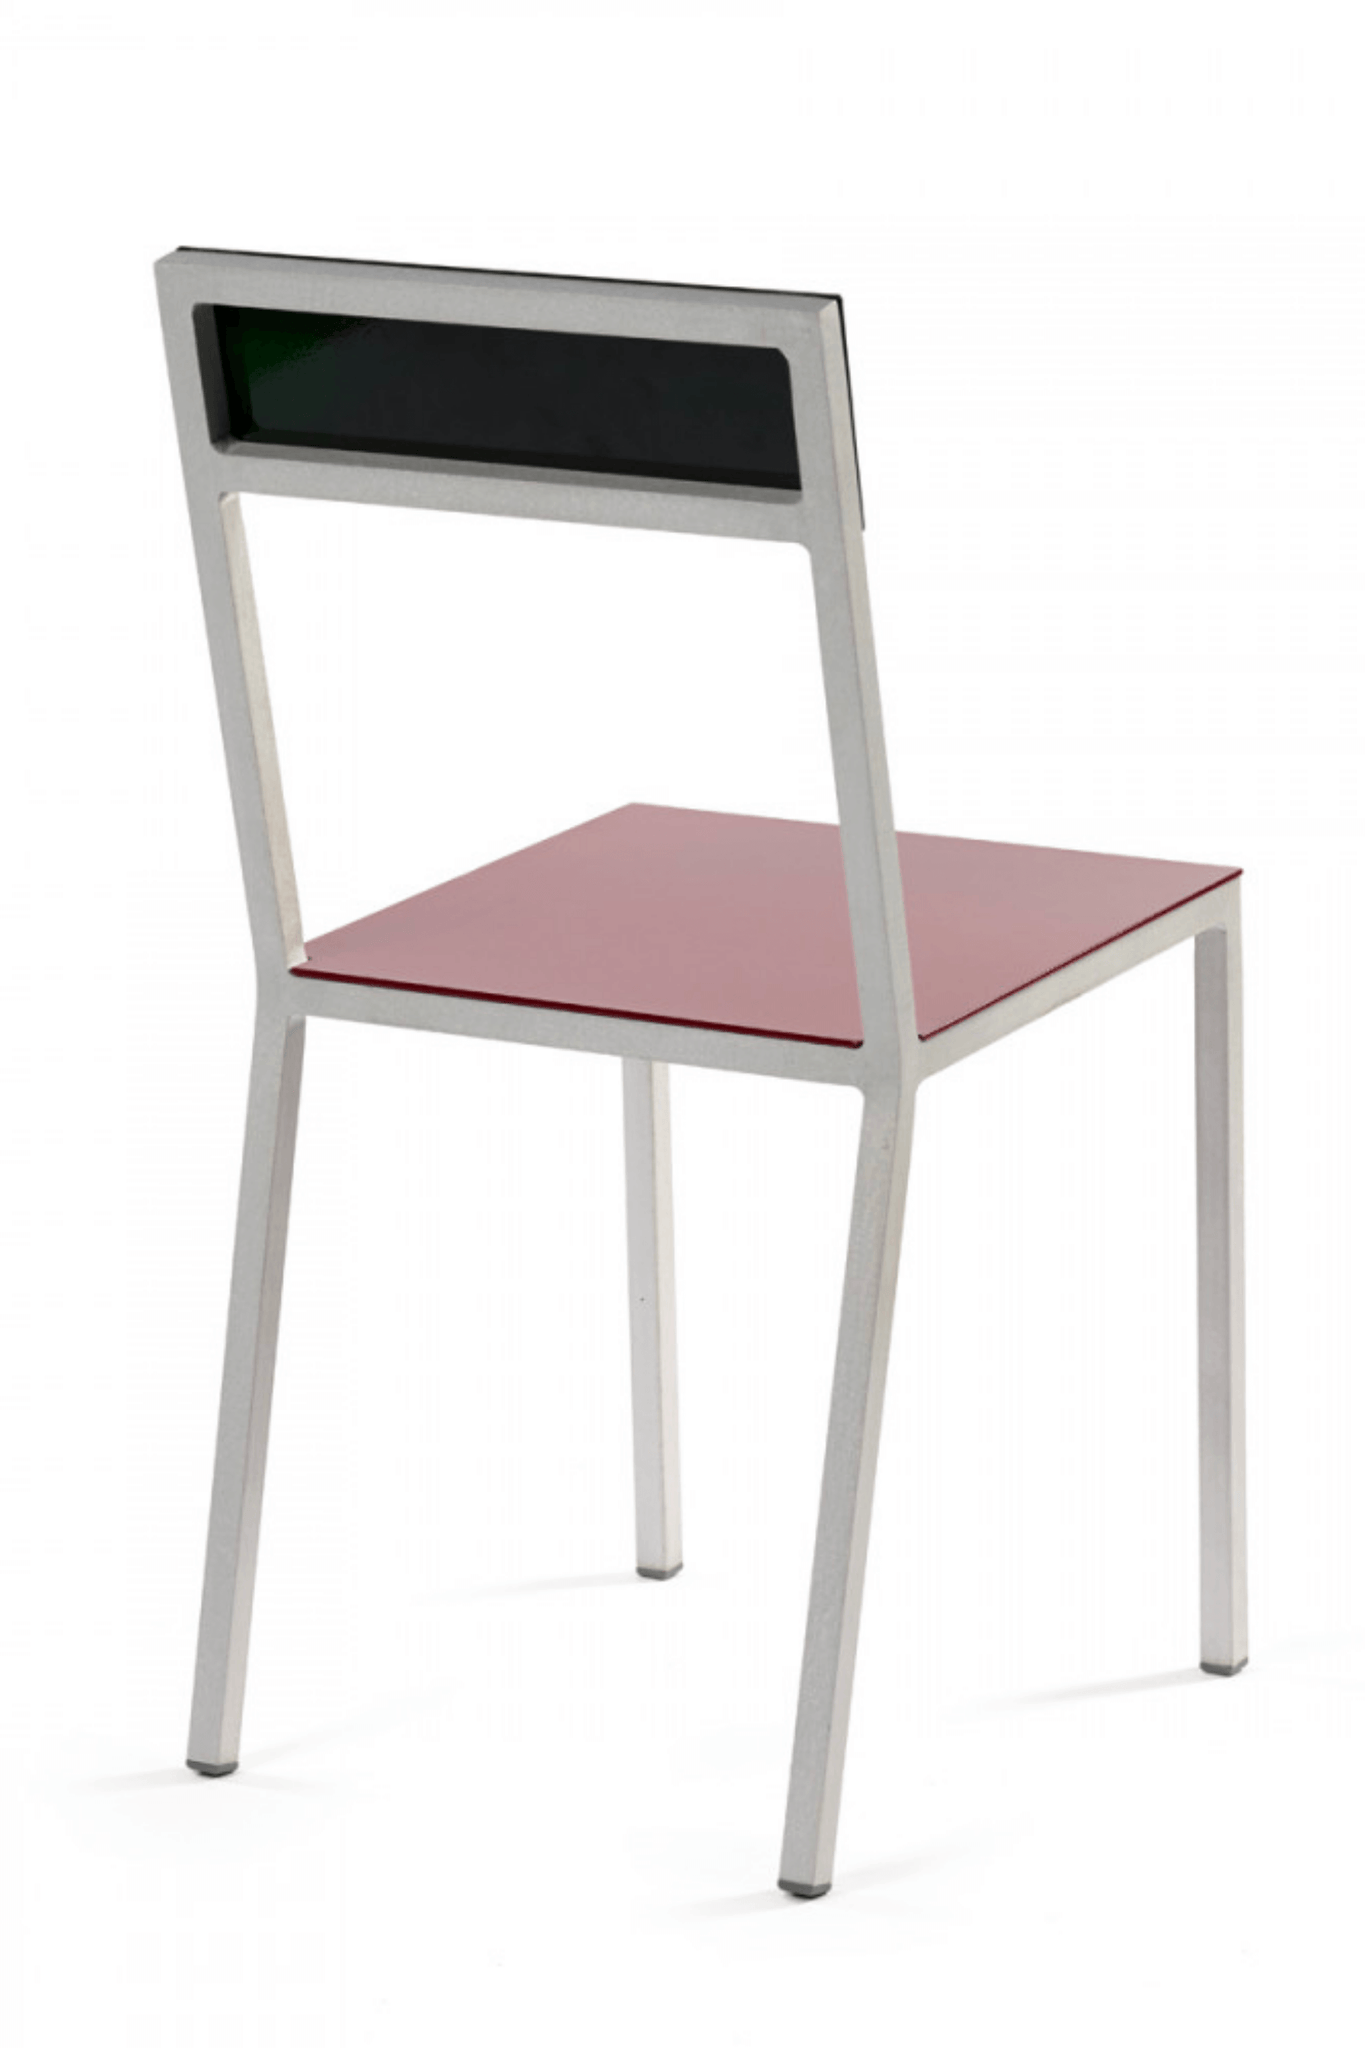 Burgundy & Candy Green Aluminum Alu Chair by Muller Van Severen for Valerie Objects, back view